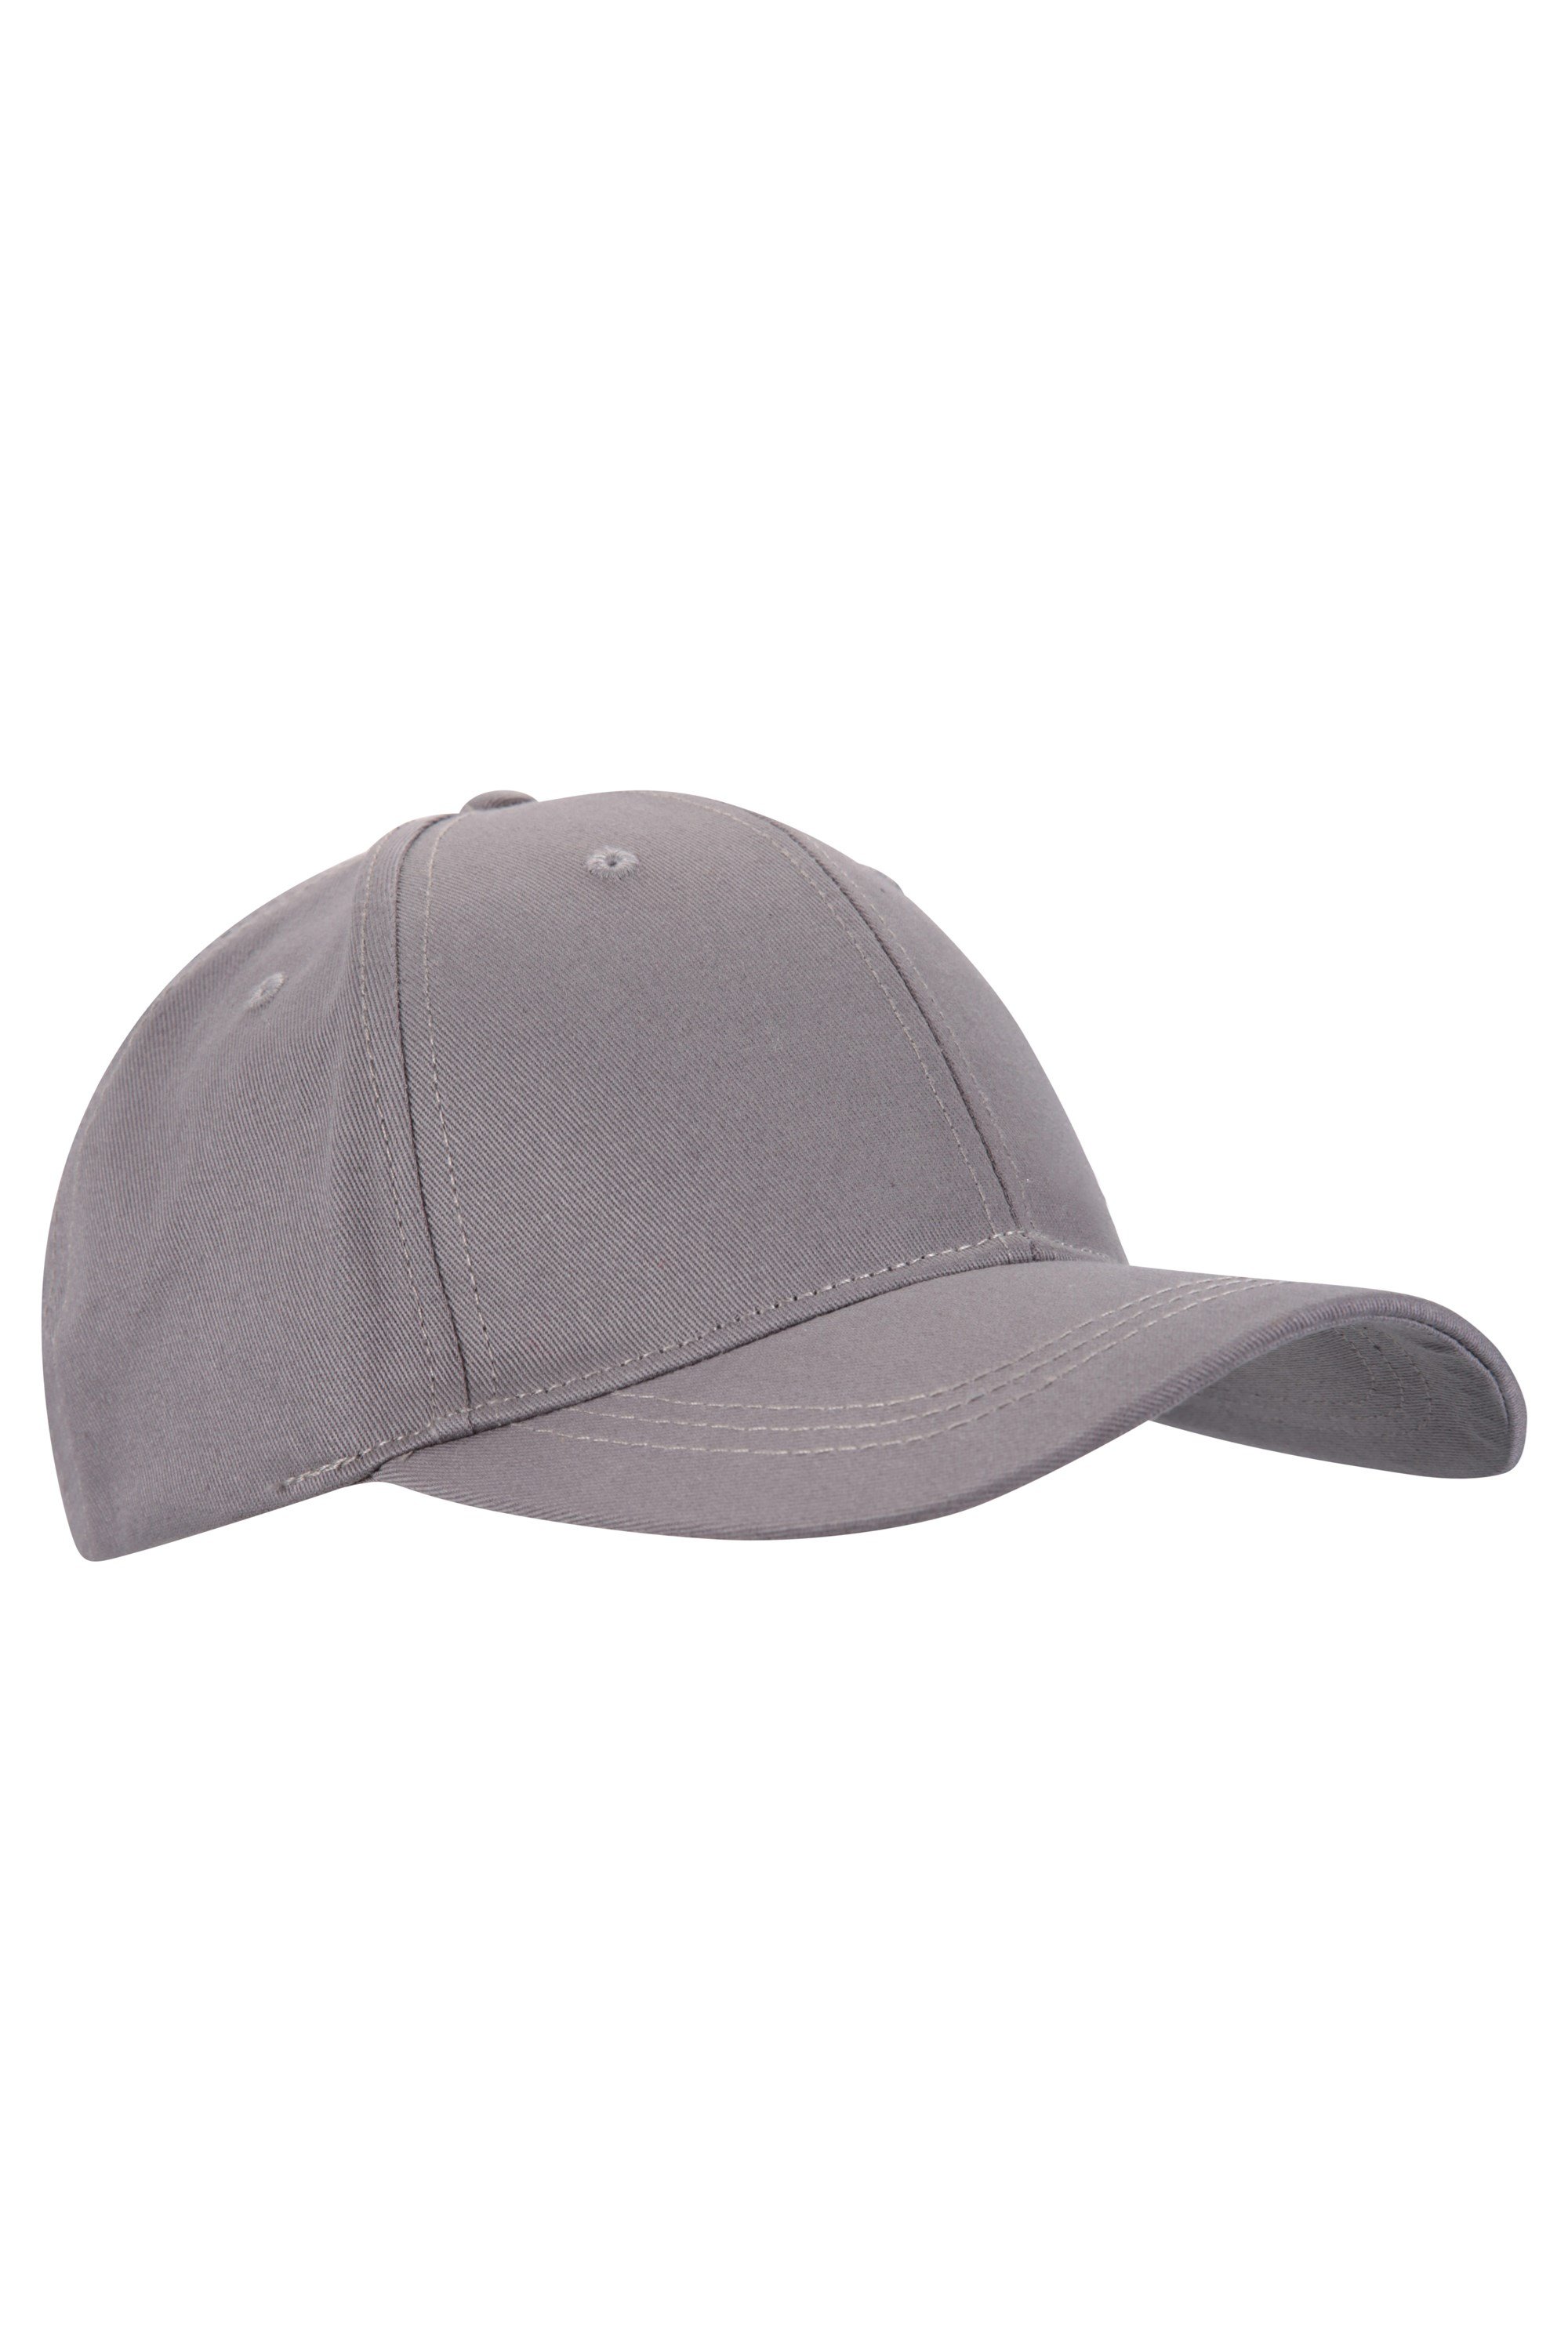 Mountain Warehouse Baseball Cap - Grey | Size One